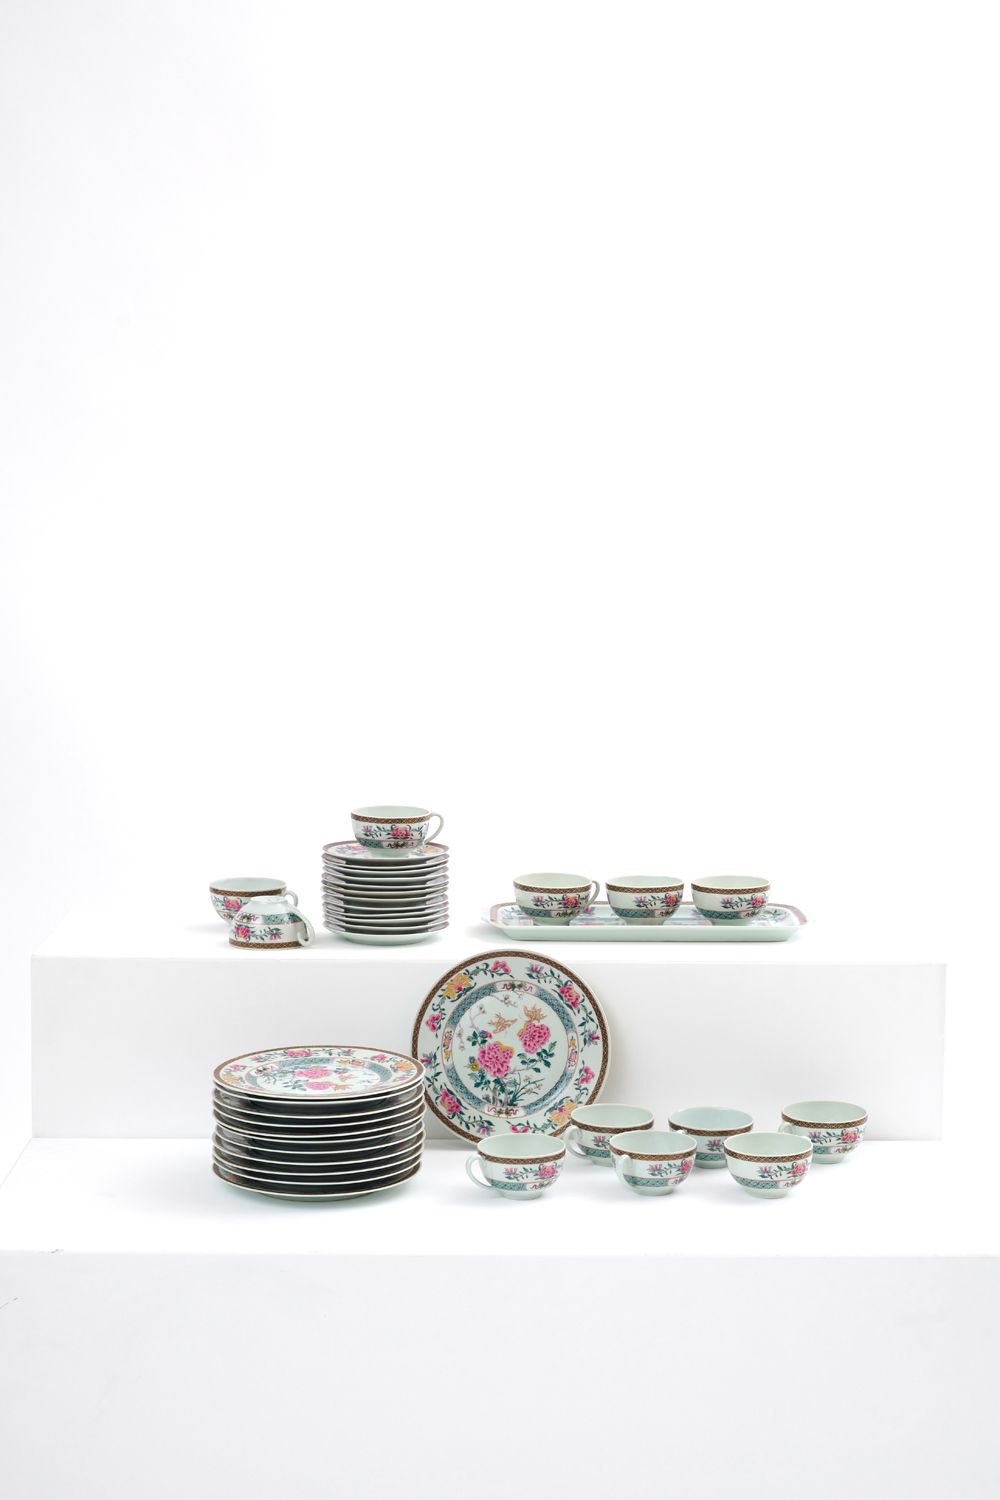 Null Haviland for puiforcat 
利摩日瓷器茶具，有多色装饰，包括12个茶杯和茶碟，12个蛋糕盘和一个蛋糕盘。每件作品的背面都印有 "H&hellip;